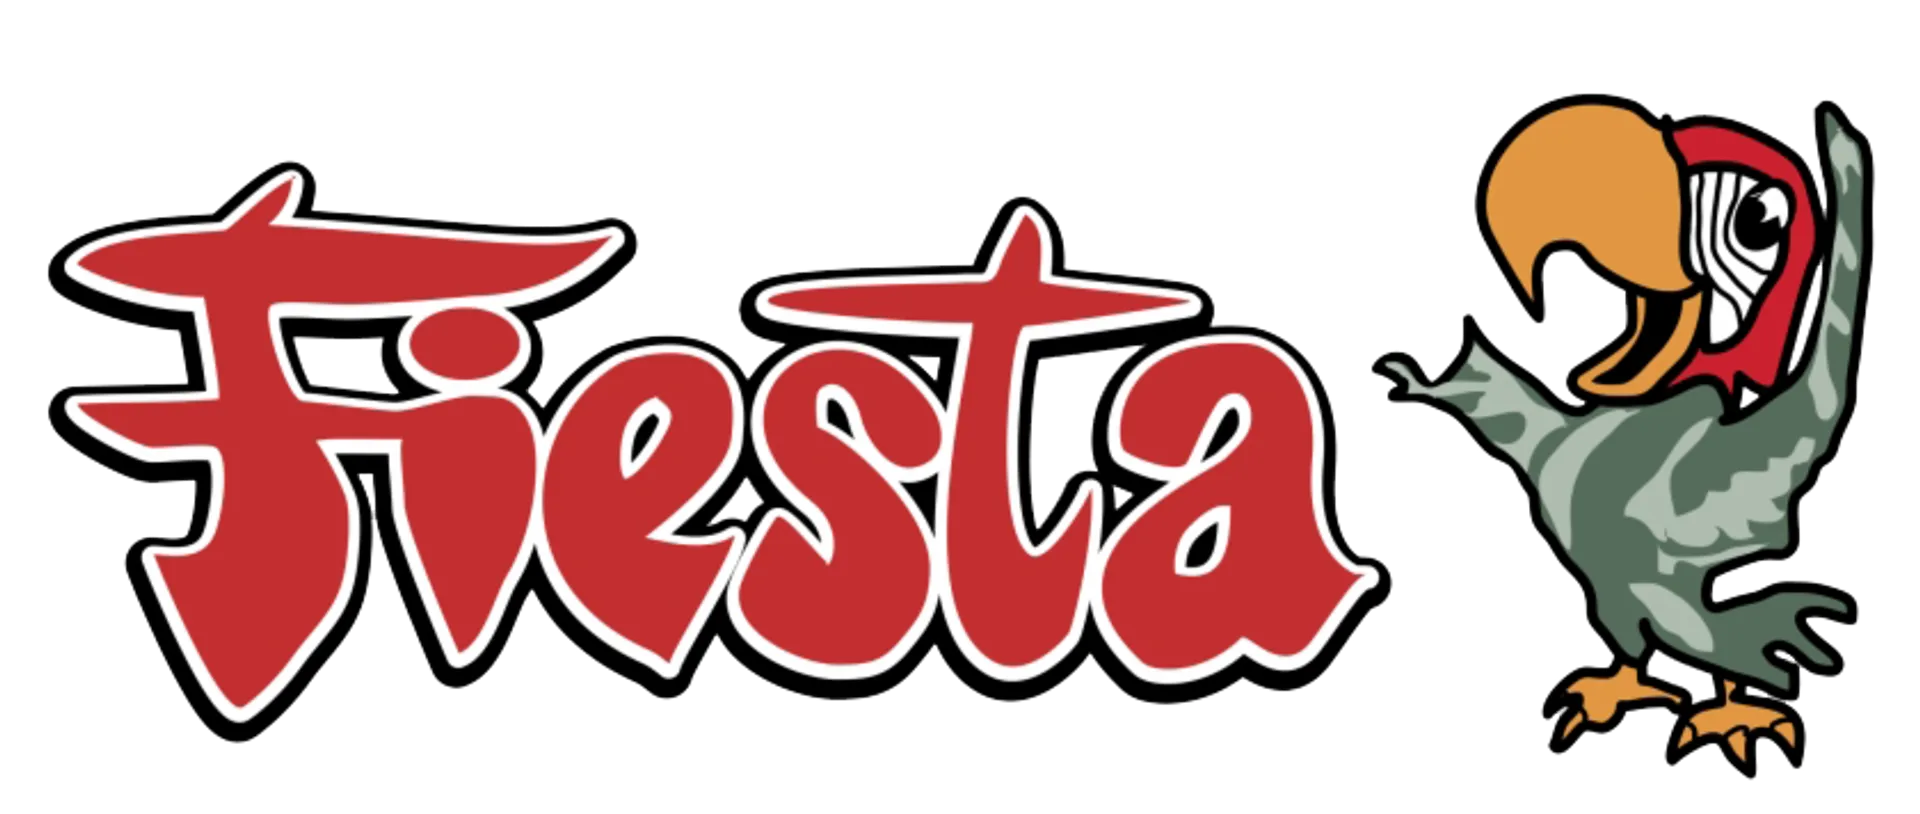 FIESTA MART logo. Current weekly ad